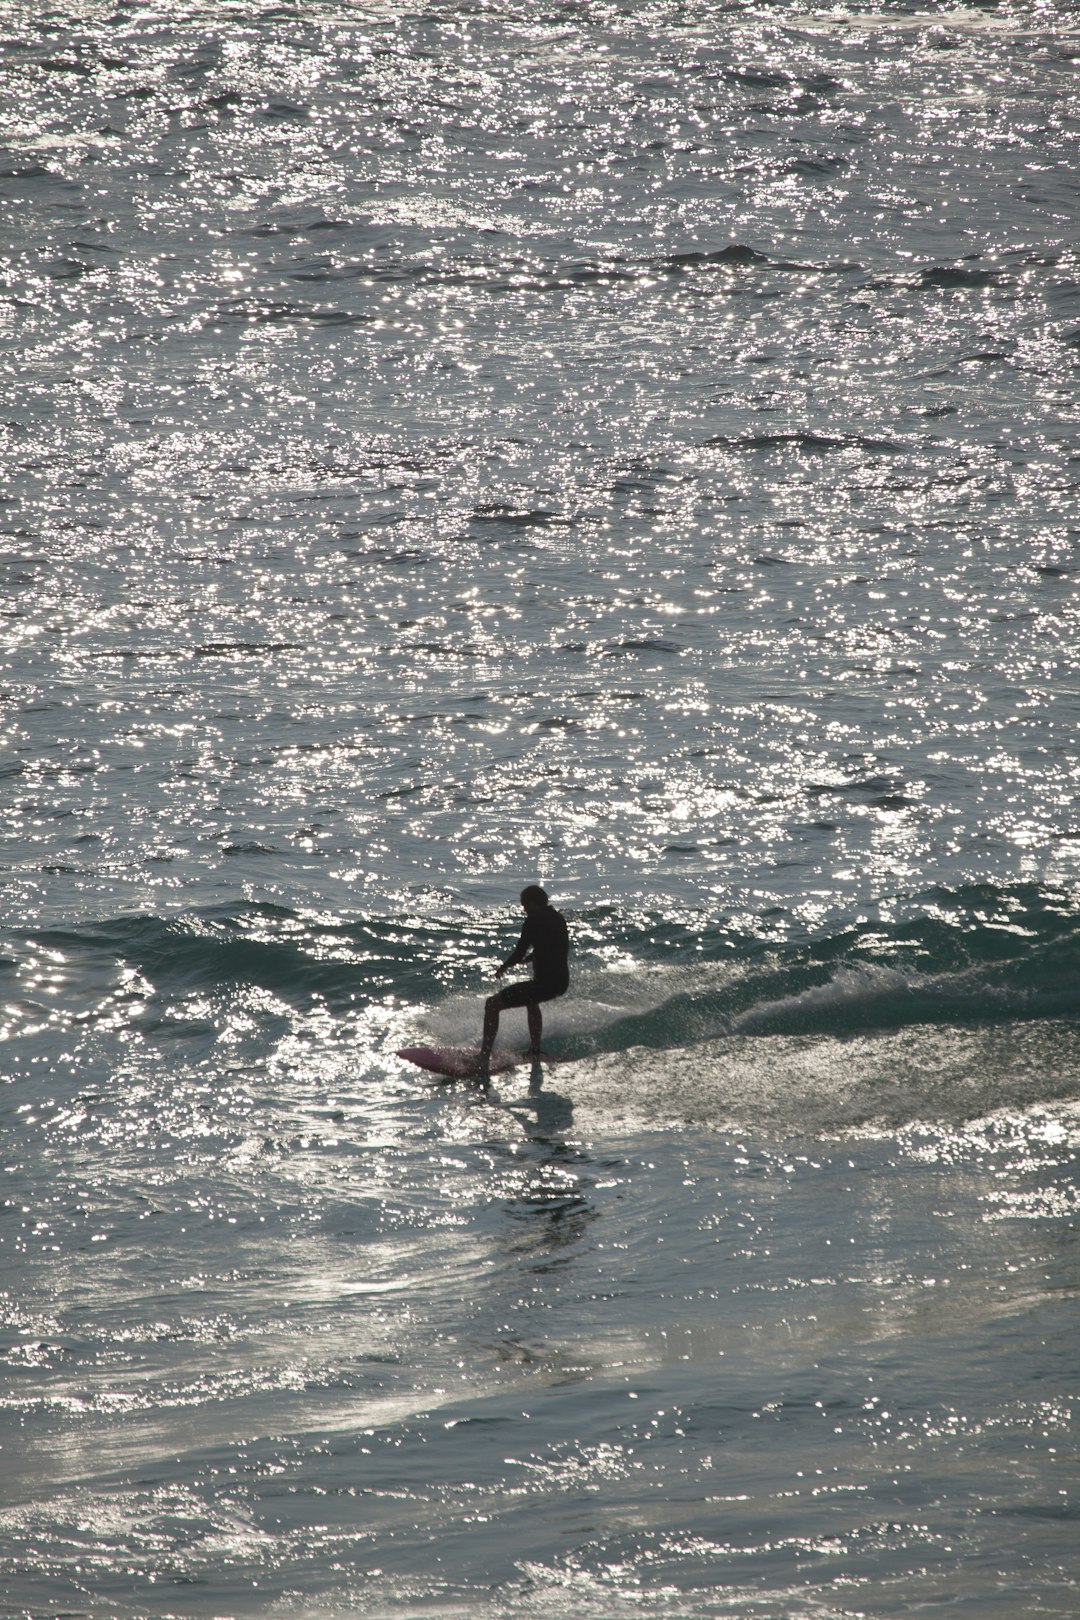 Surfing photo spot Tamarama Beach Australia